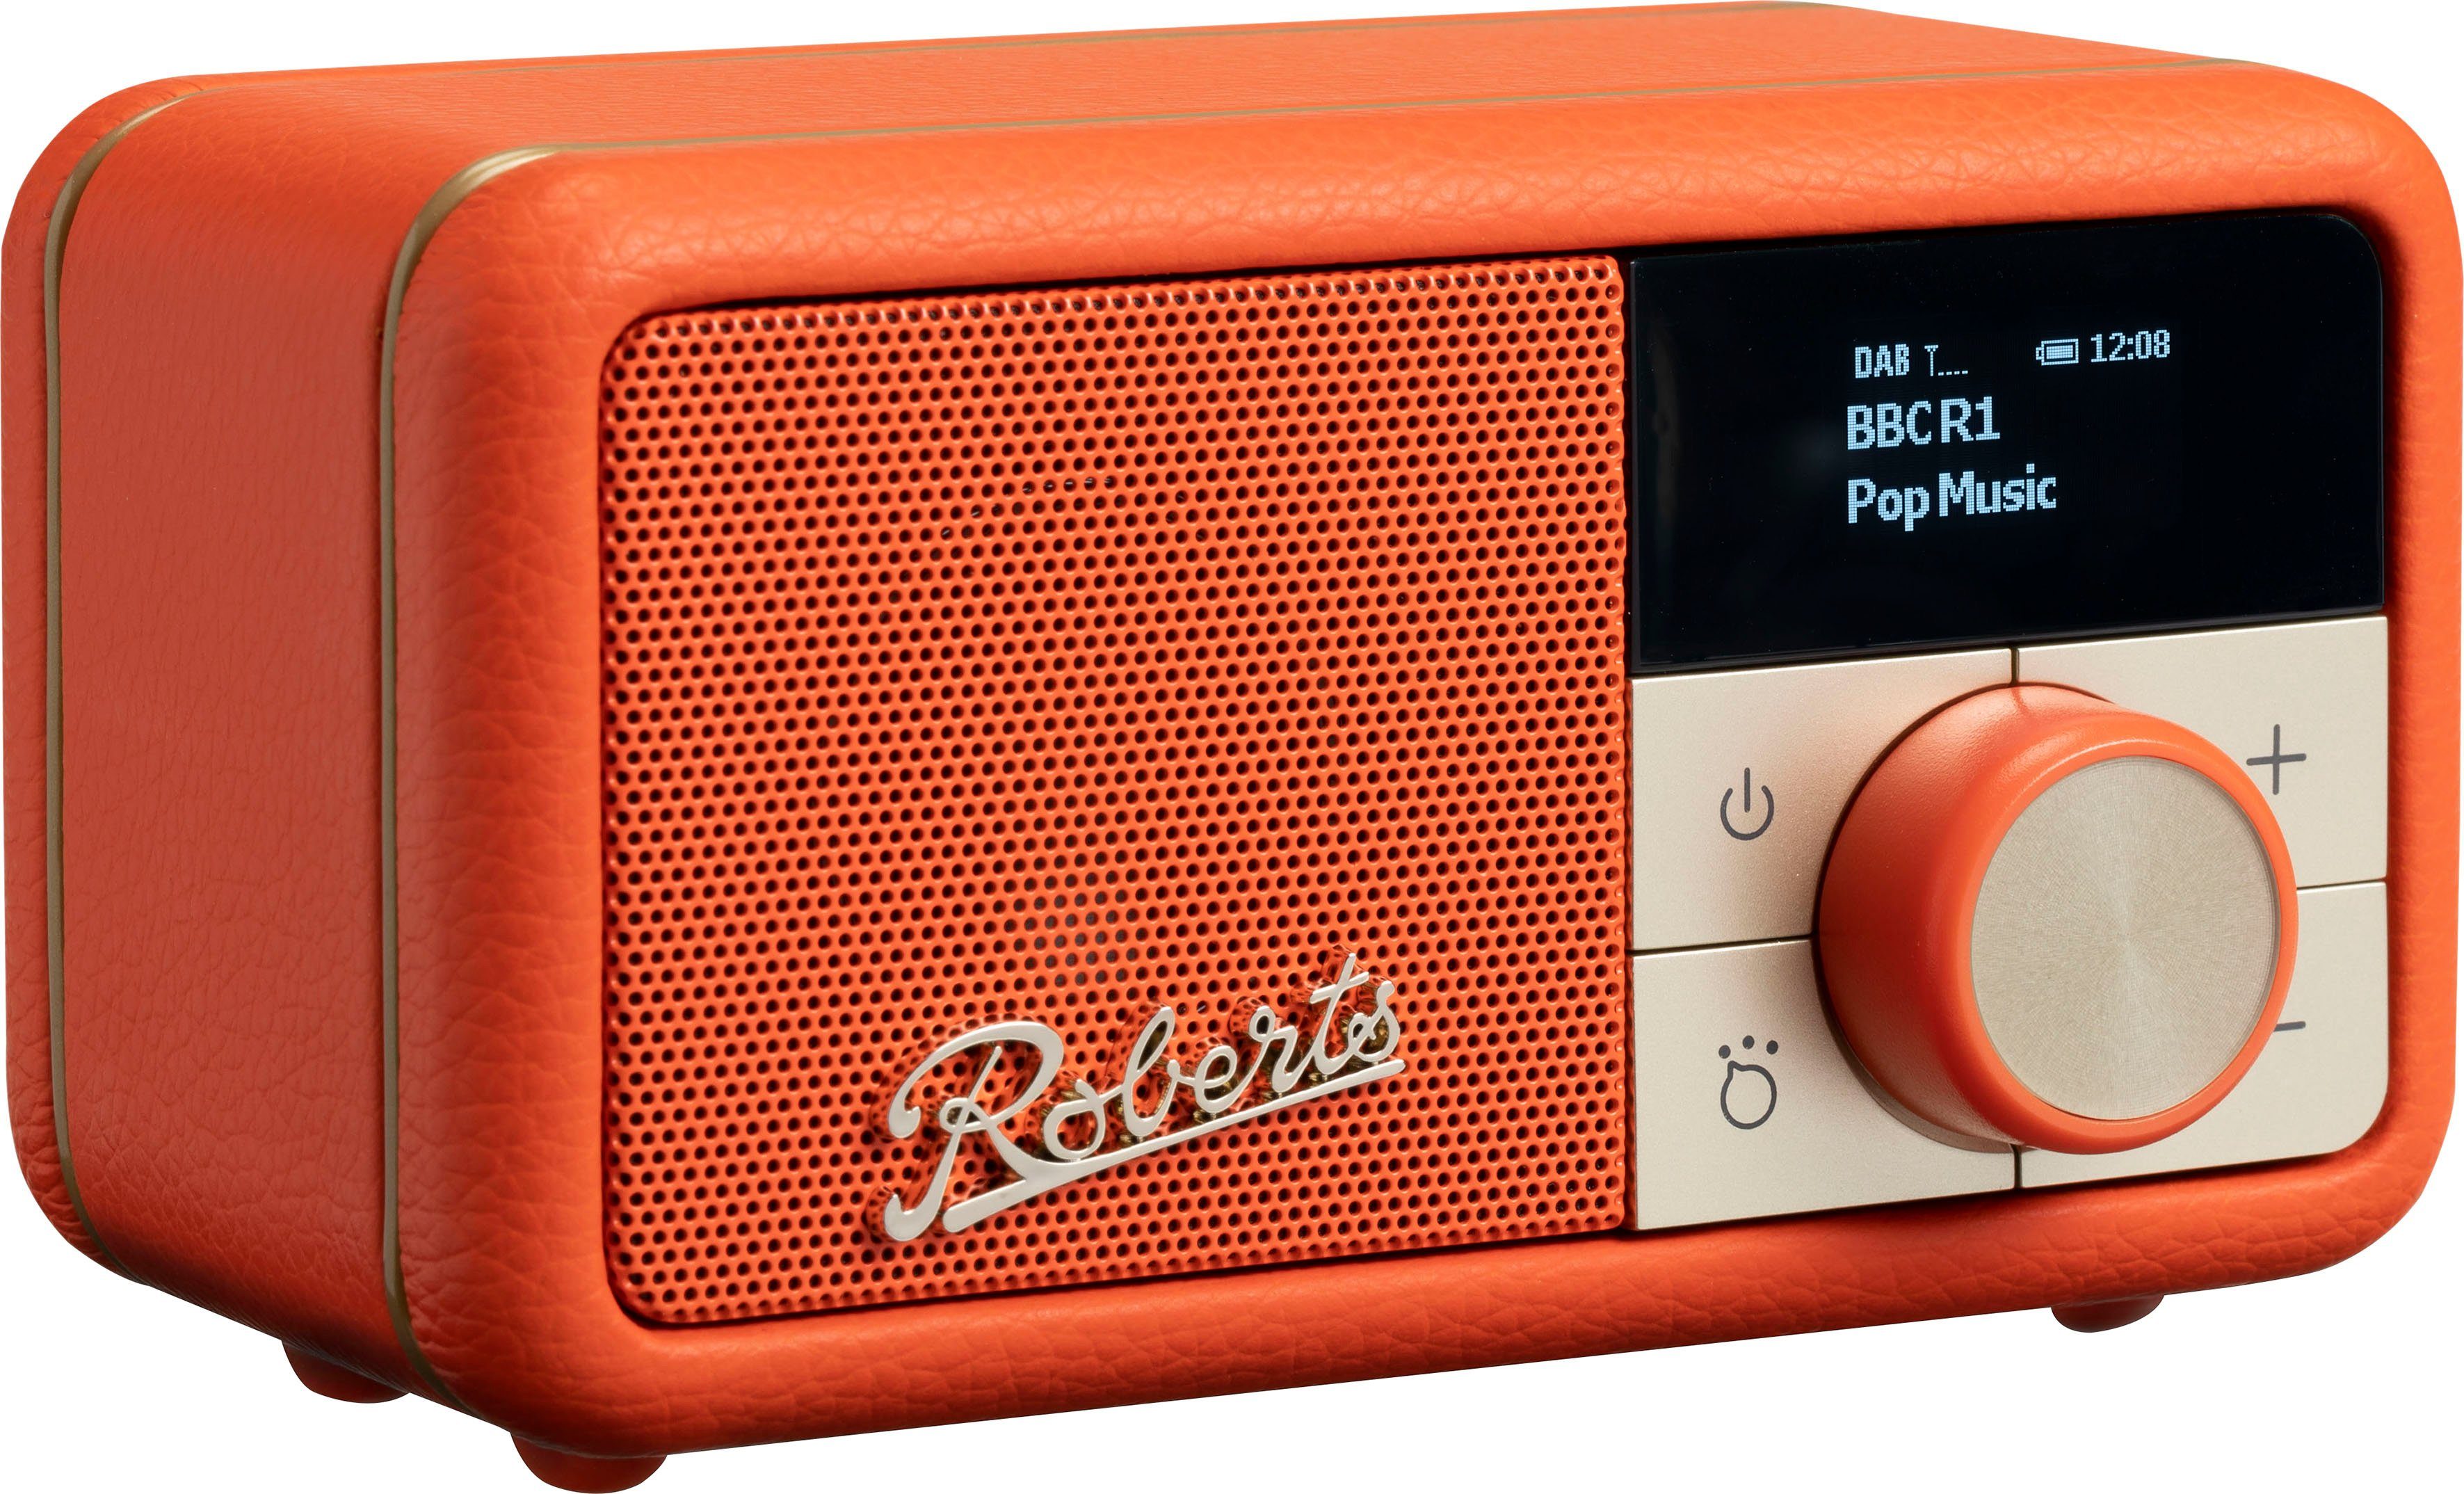 ROBERTS RADIO Radio Revival Petite